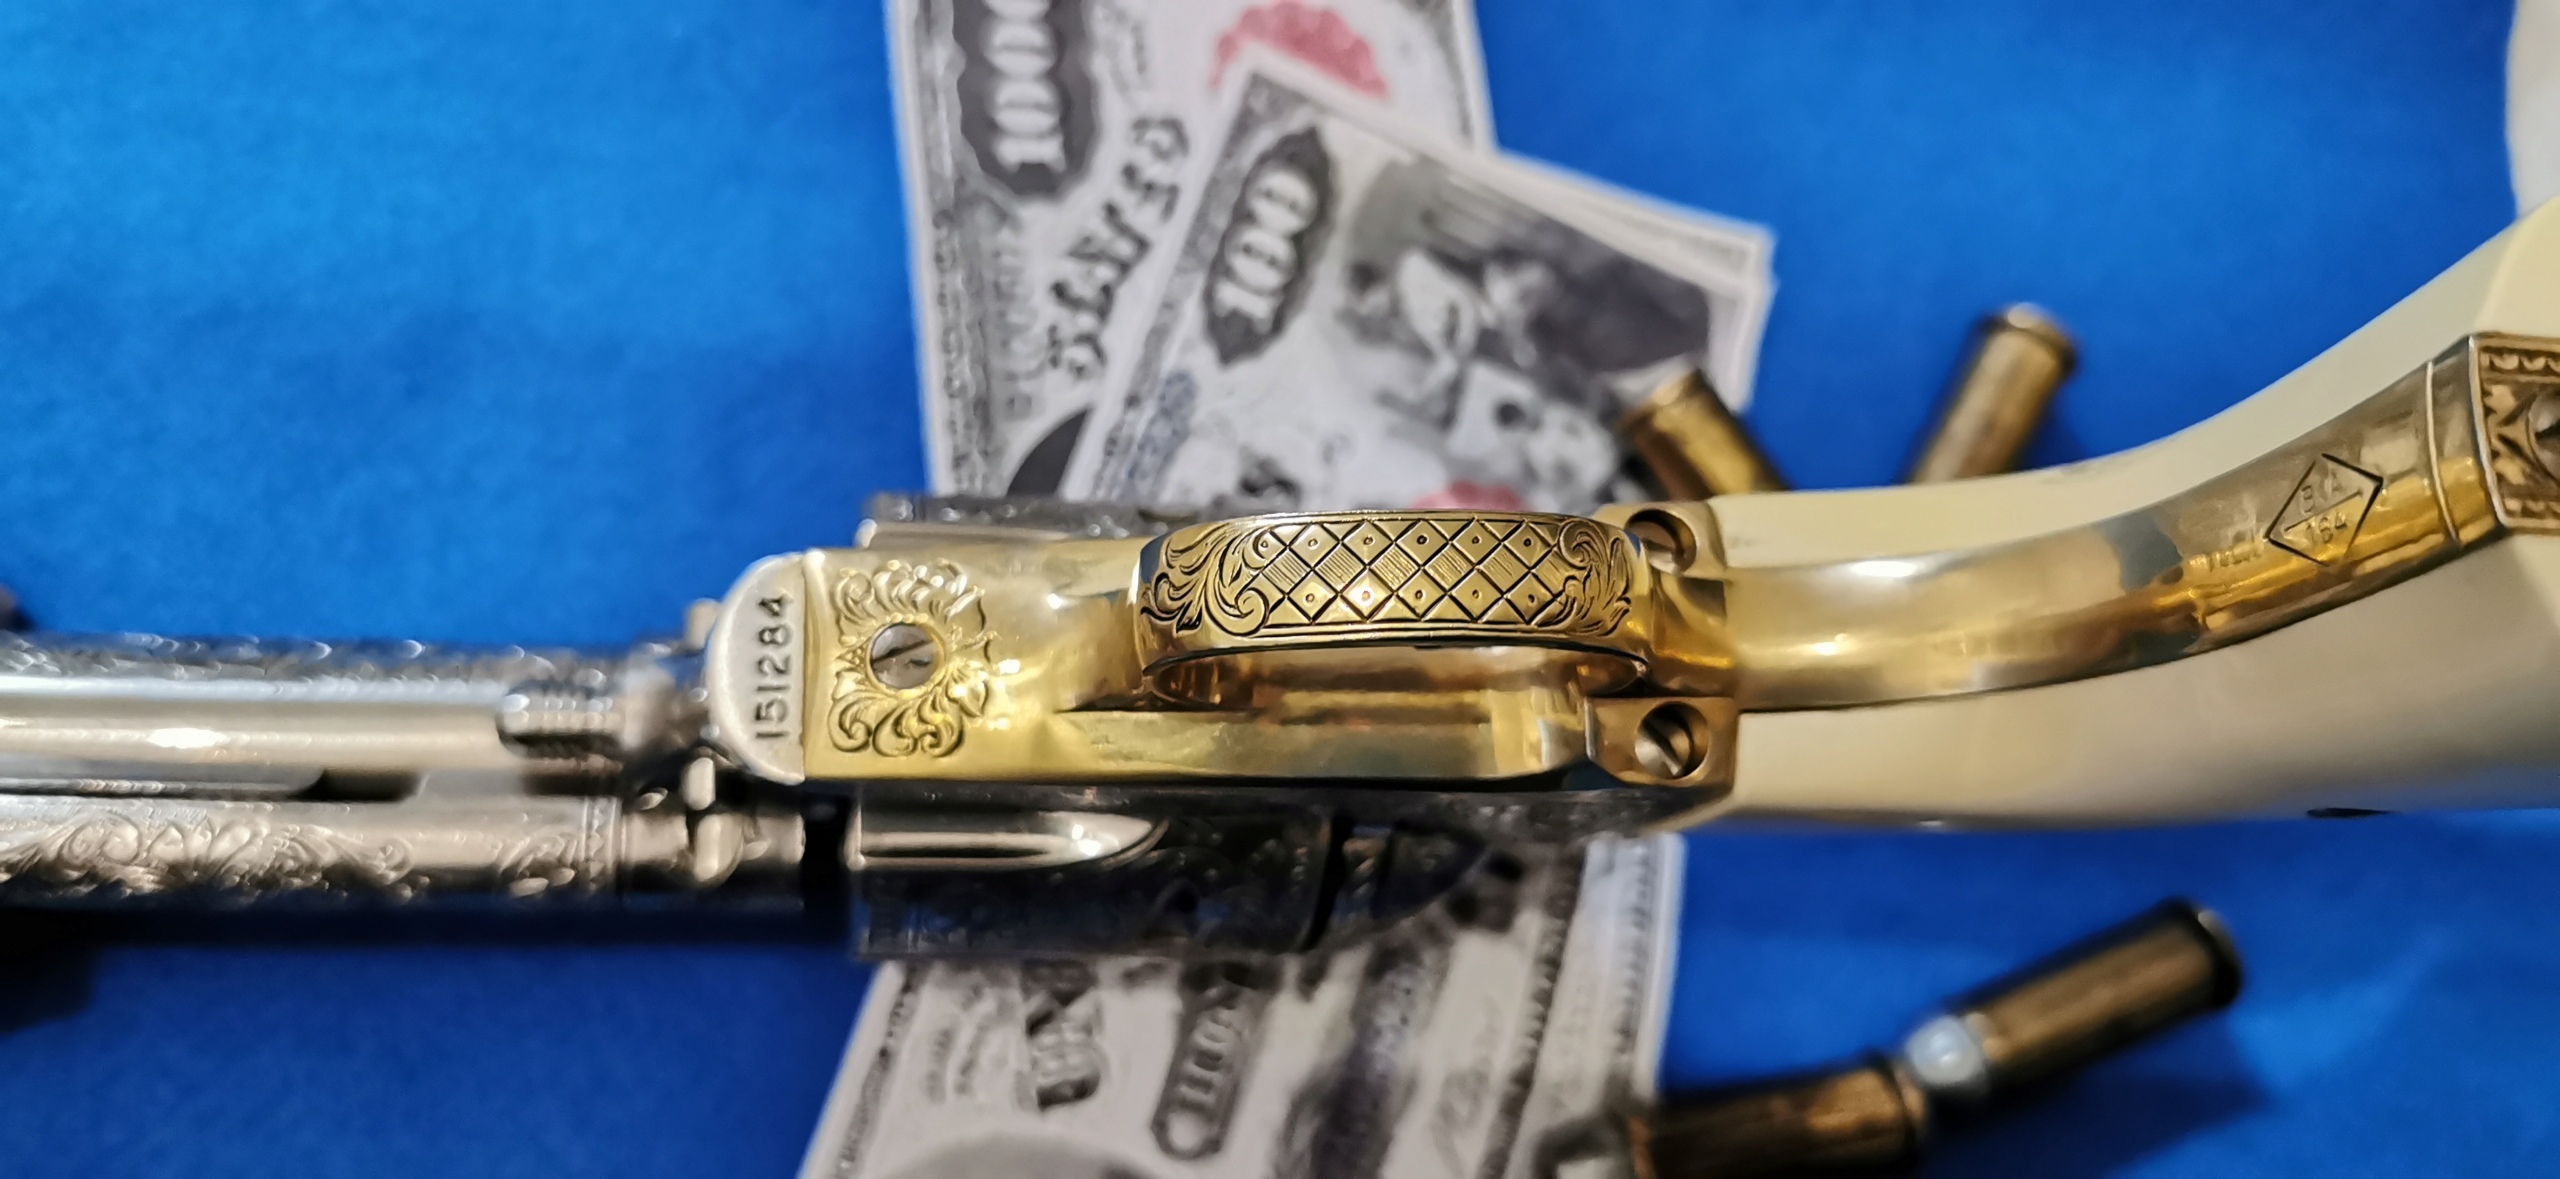 Colt SAA "John Wayne" - Franklin Mint Img_1651